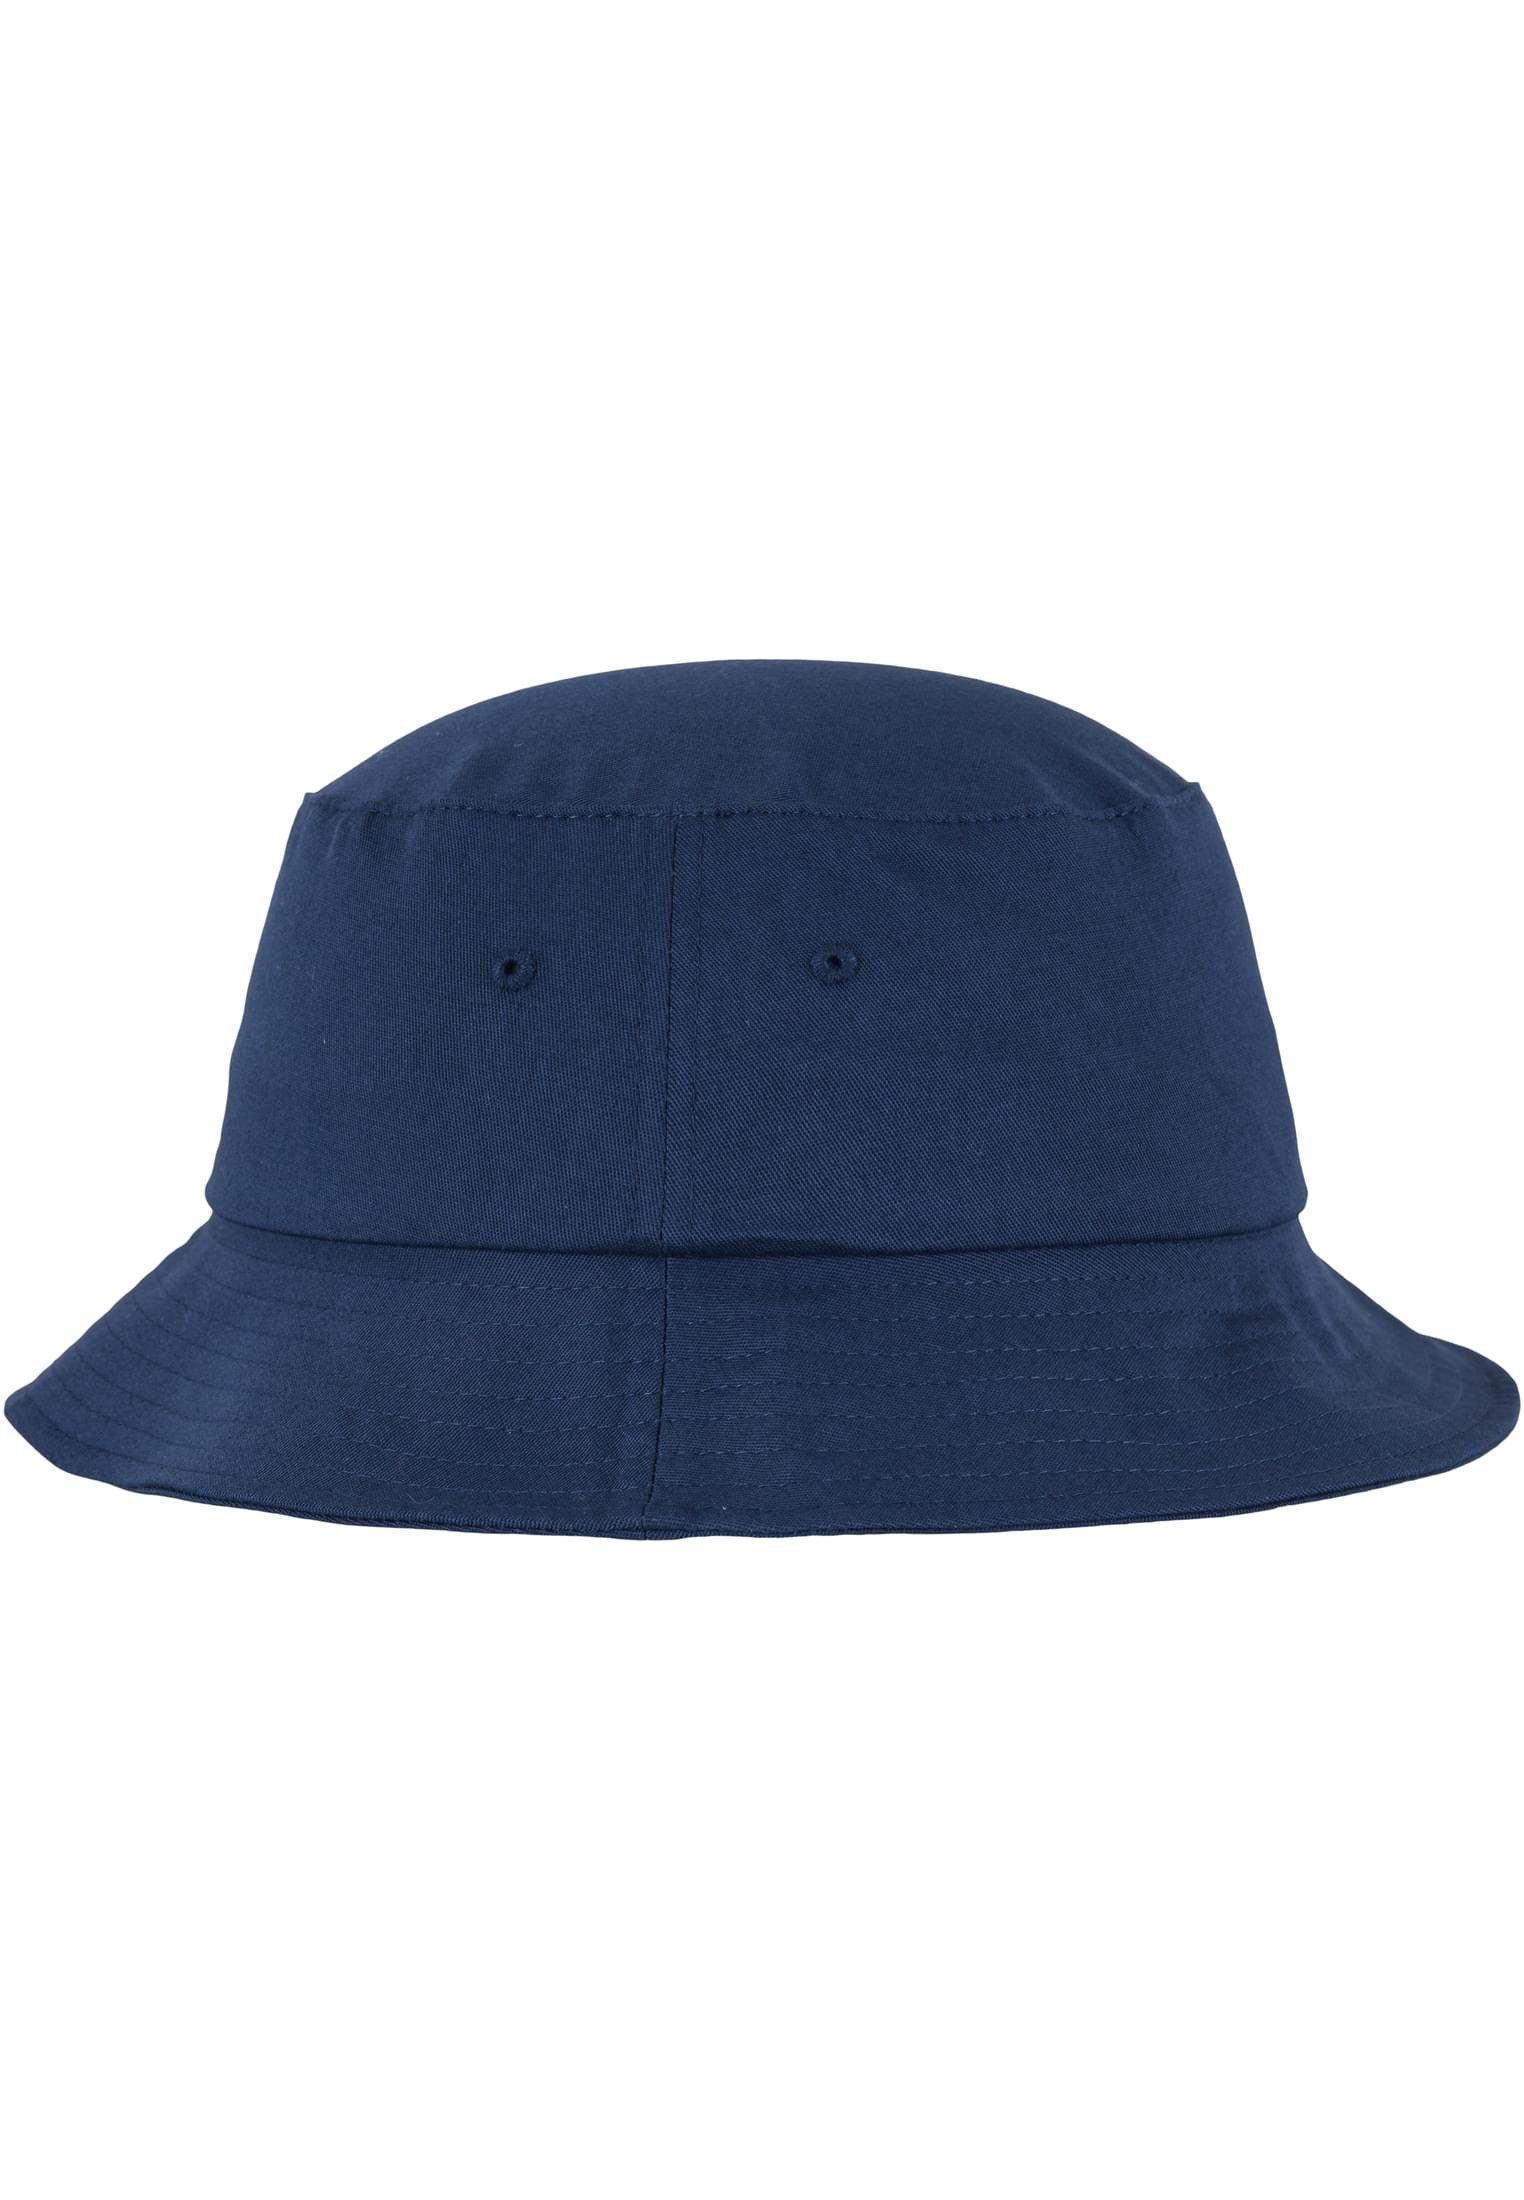 Accessoires Cap Bucket Cotton Hat Twill Flex Flexfit navy Flexfit